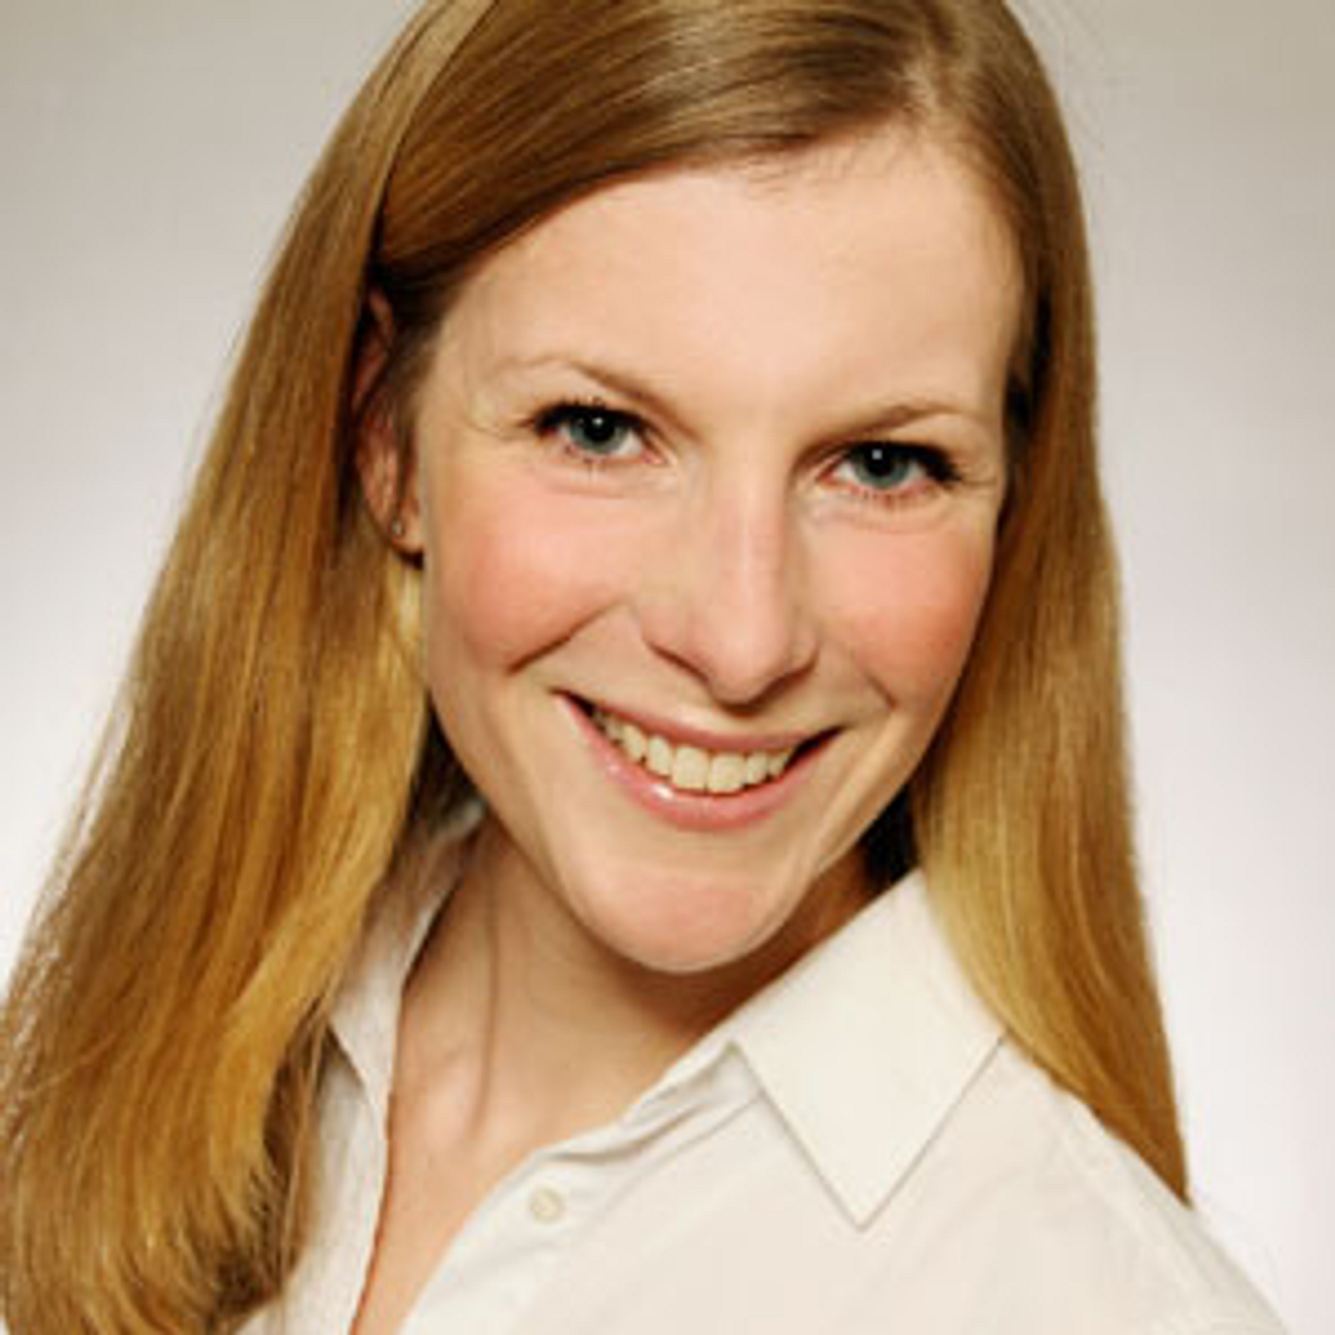 Kinderärztin Dr. Nadine Hess gibt Tipps zur Behandlung bei Röschenflechte